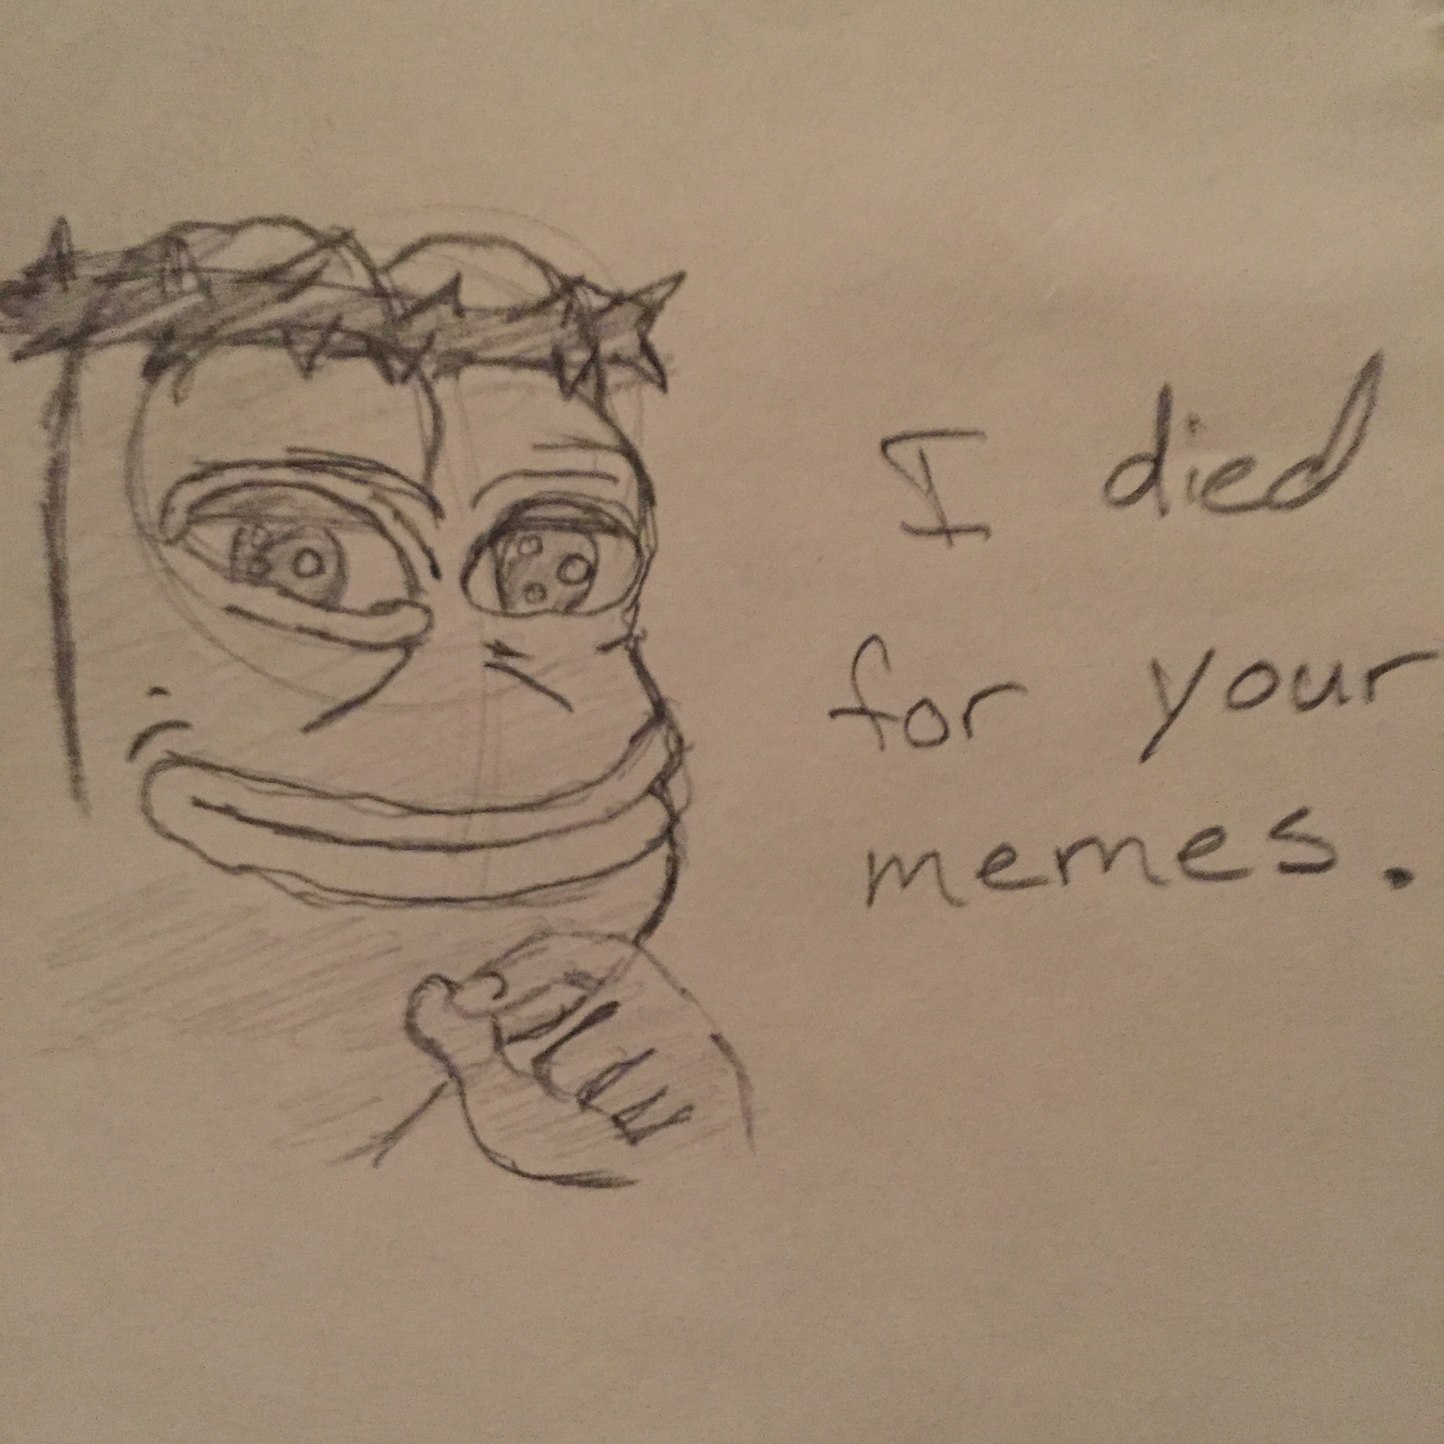 Pepe - meme